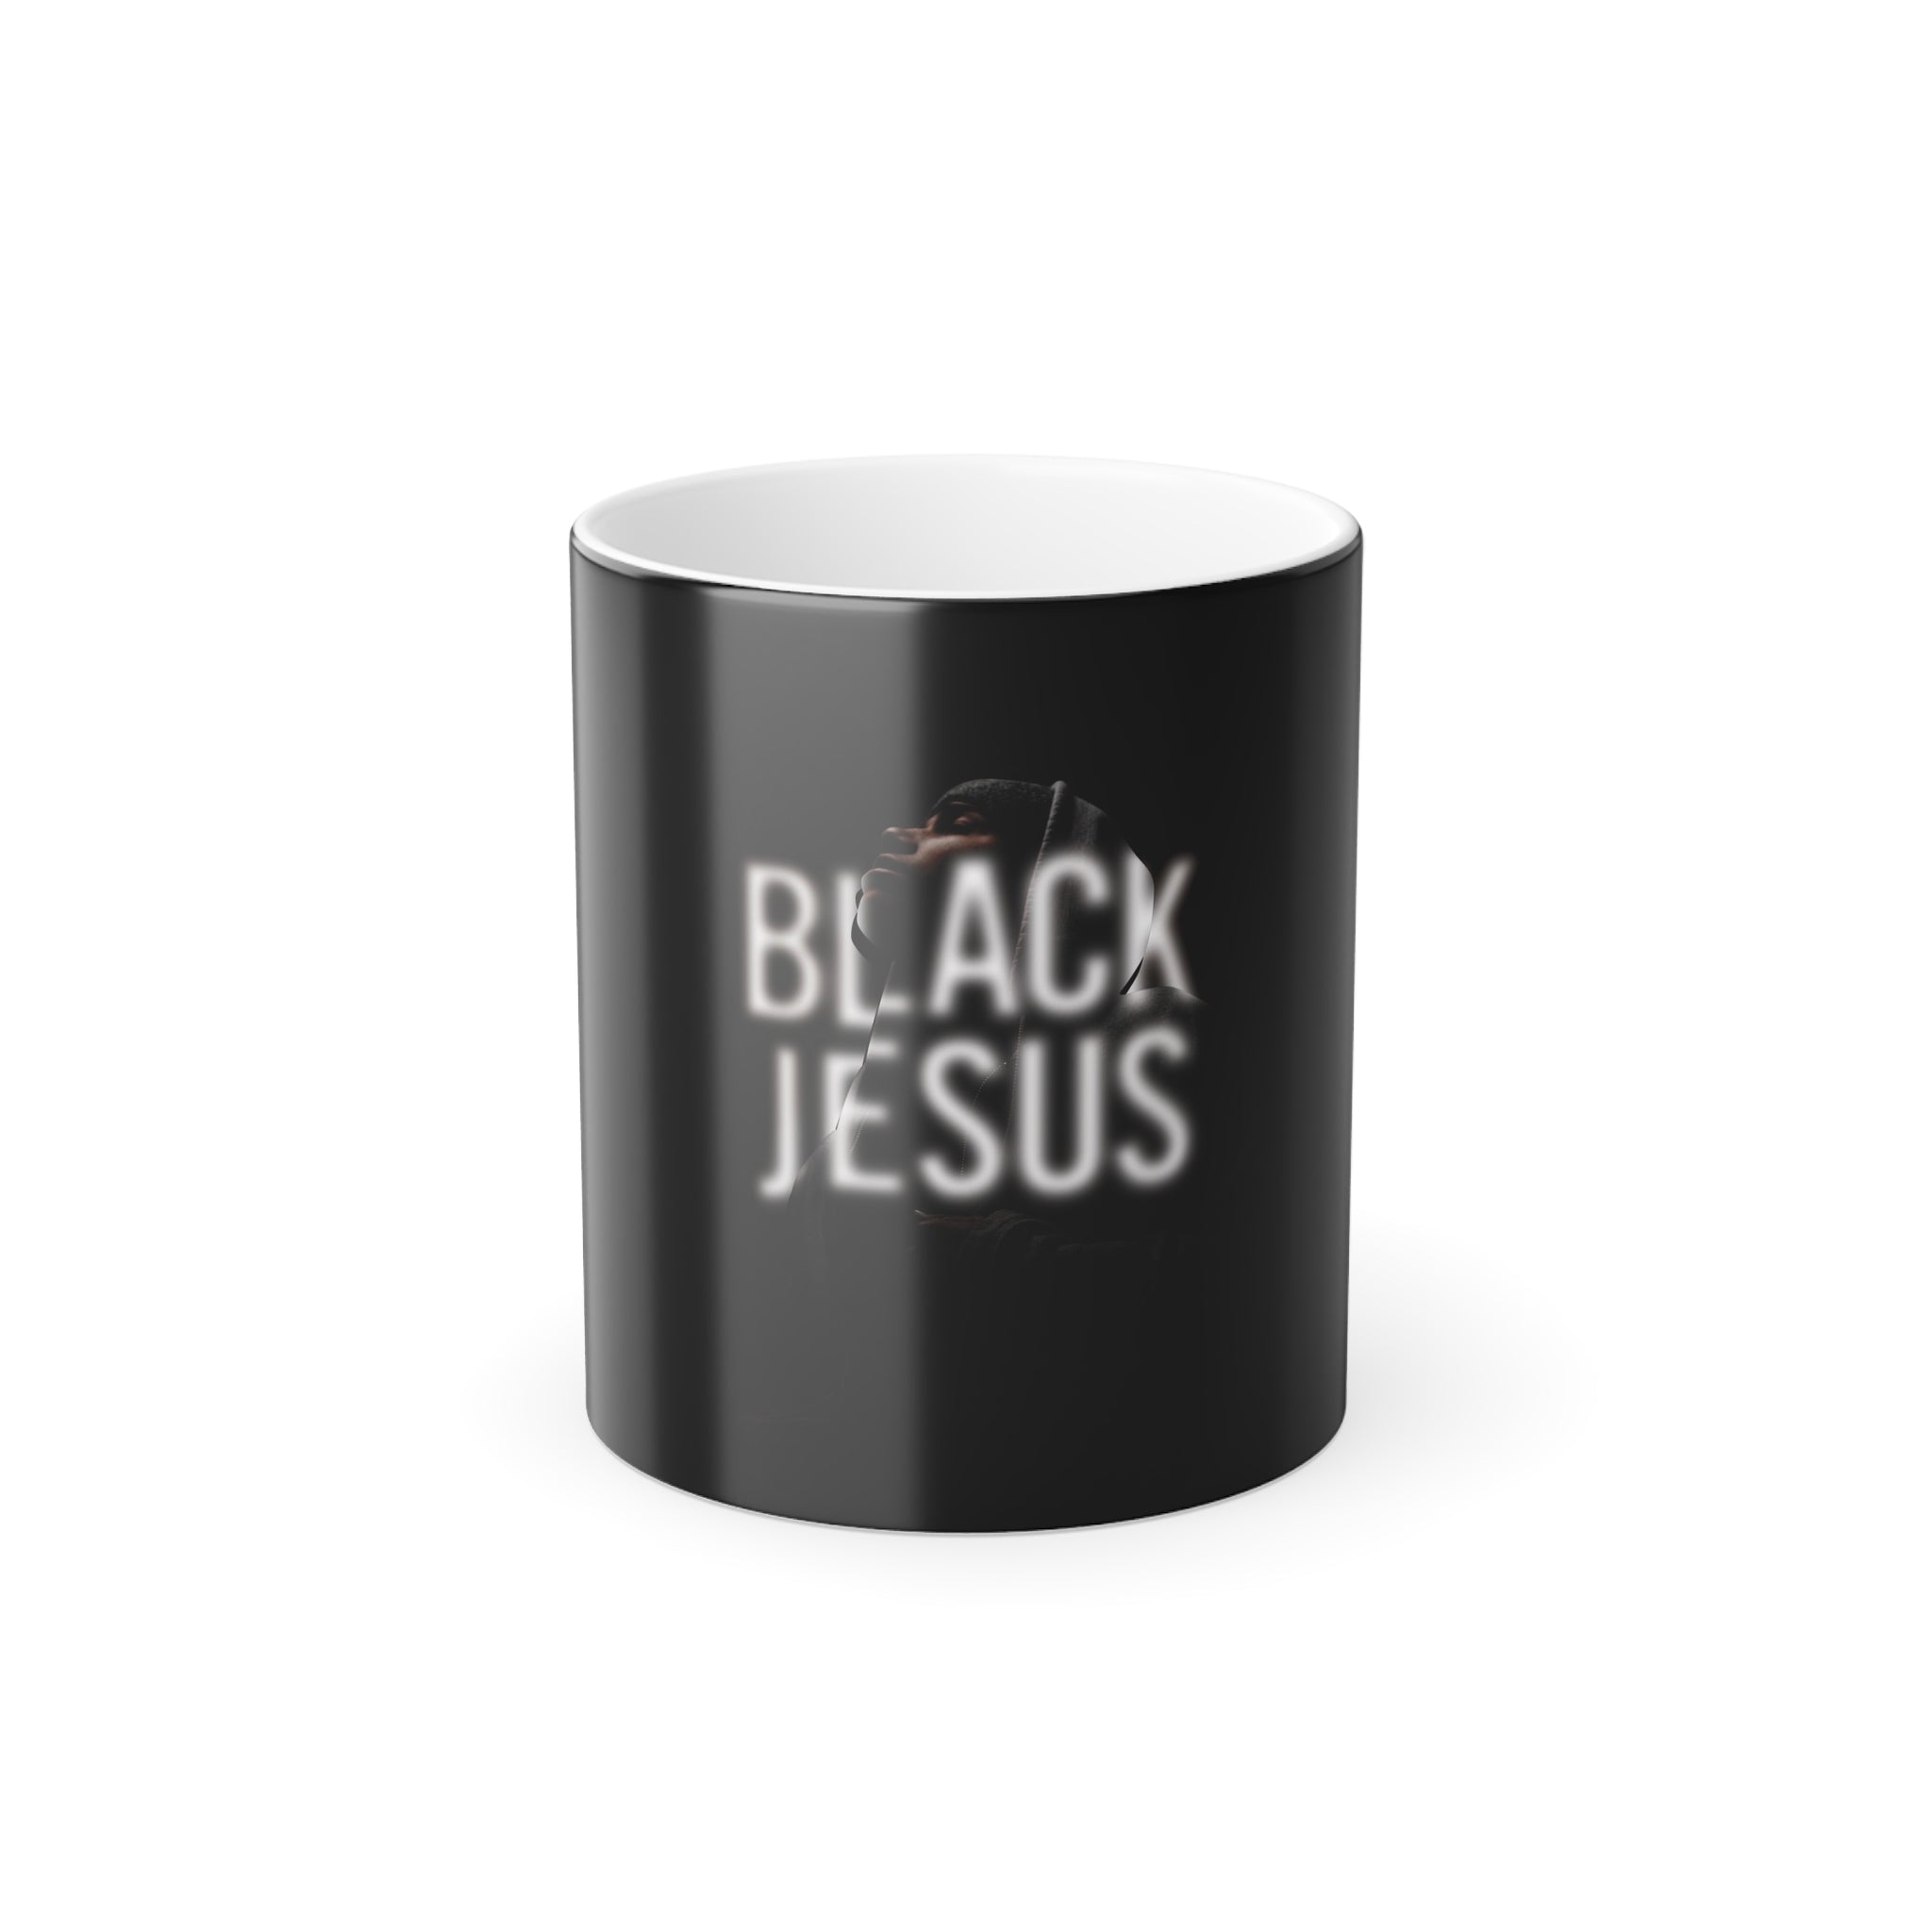 Black Jesus Ghost Mug, 11 oz